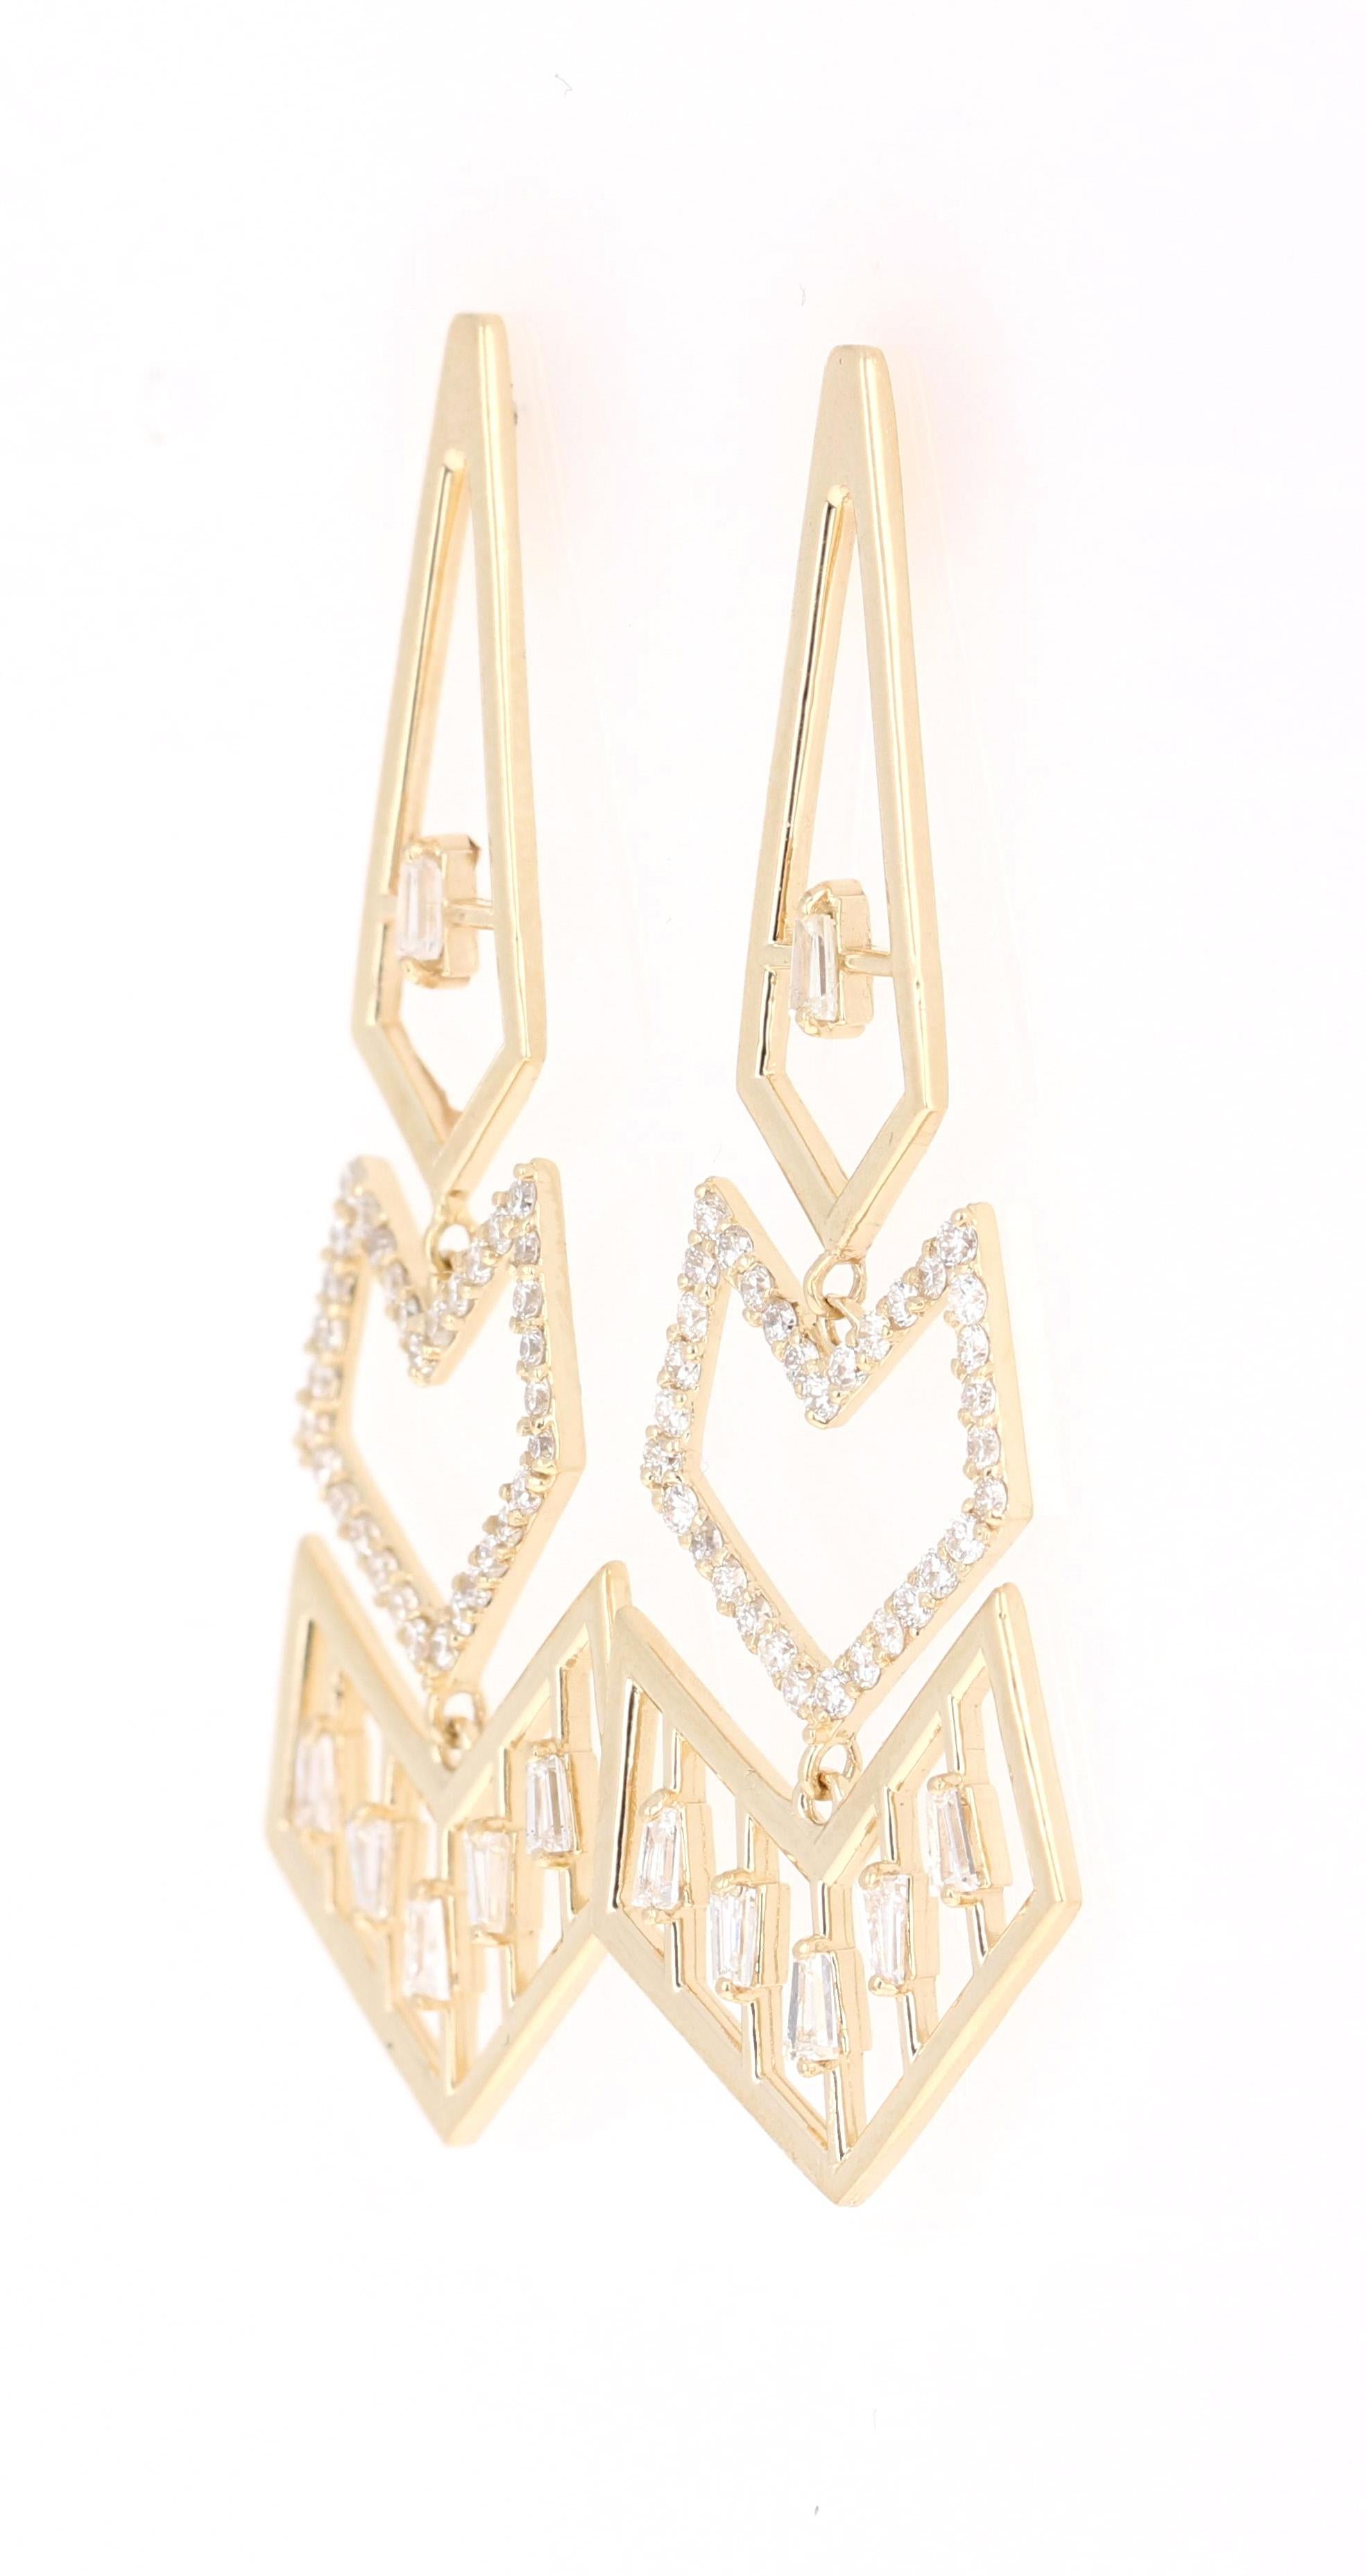 Baguette Cut 0.92 Carat Diamond 14 Karat Yellow Gold Art Deco Inspired Earrings